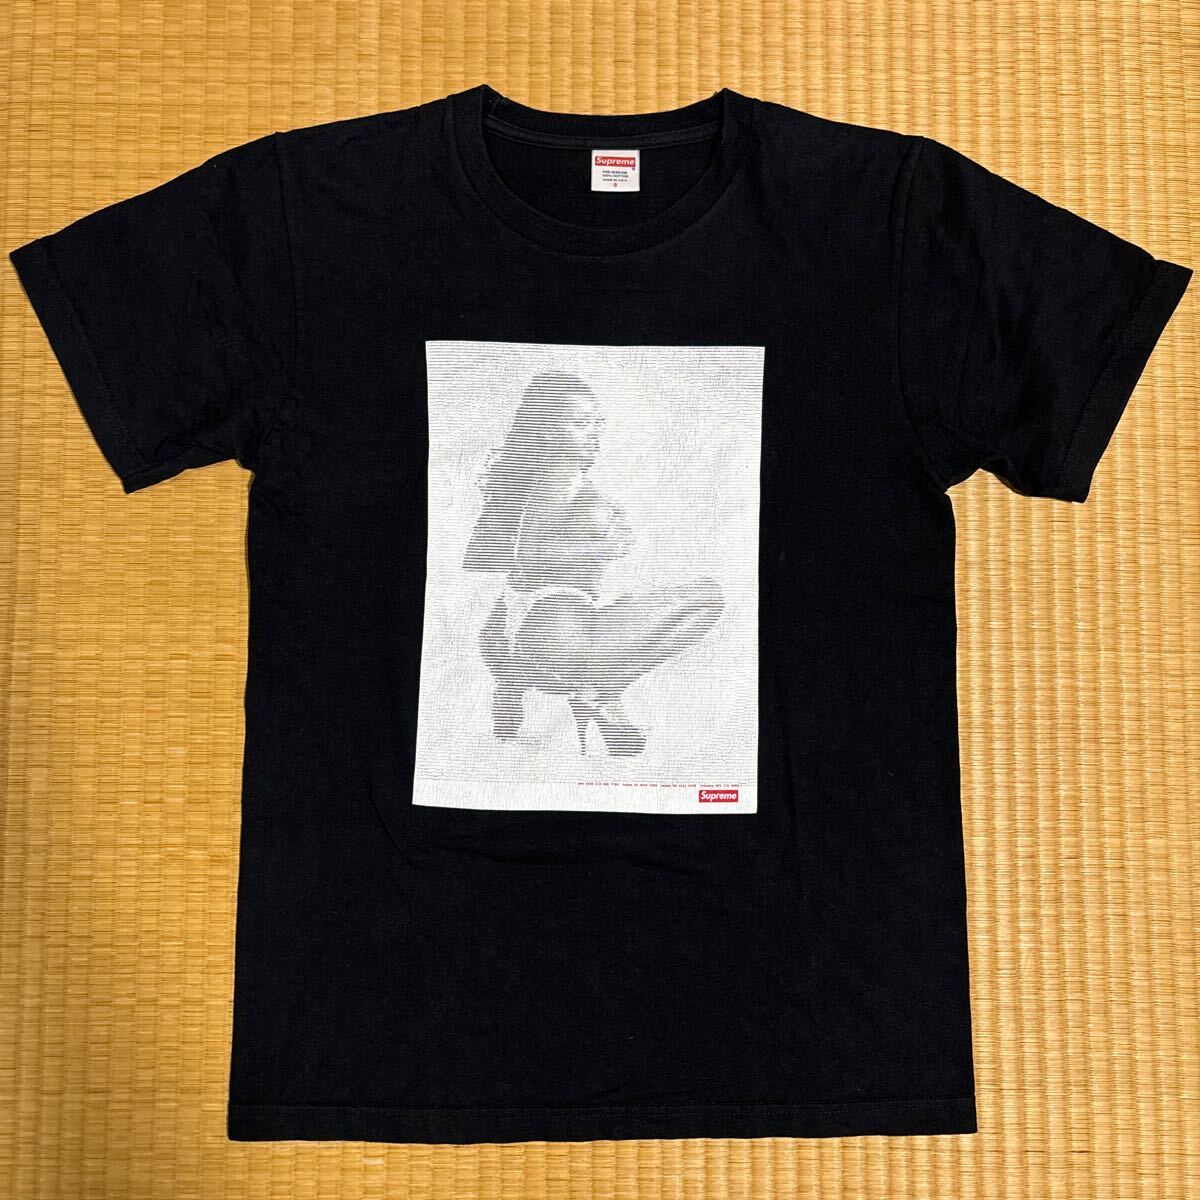 Supreme x テリーリチャードソン digi フォト Tシャツ 黒 レア Tee box logoの画像1